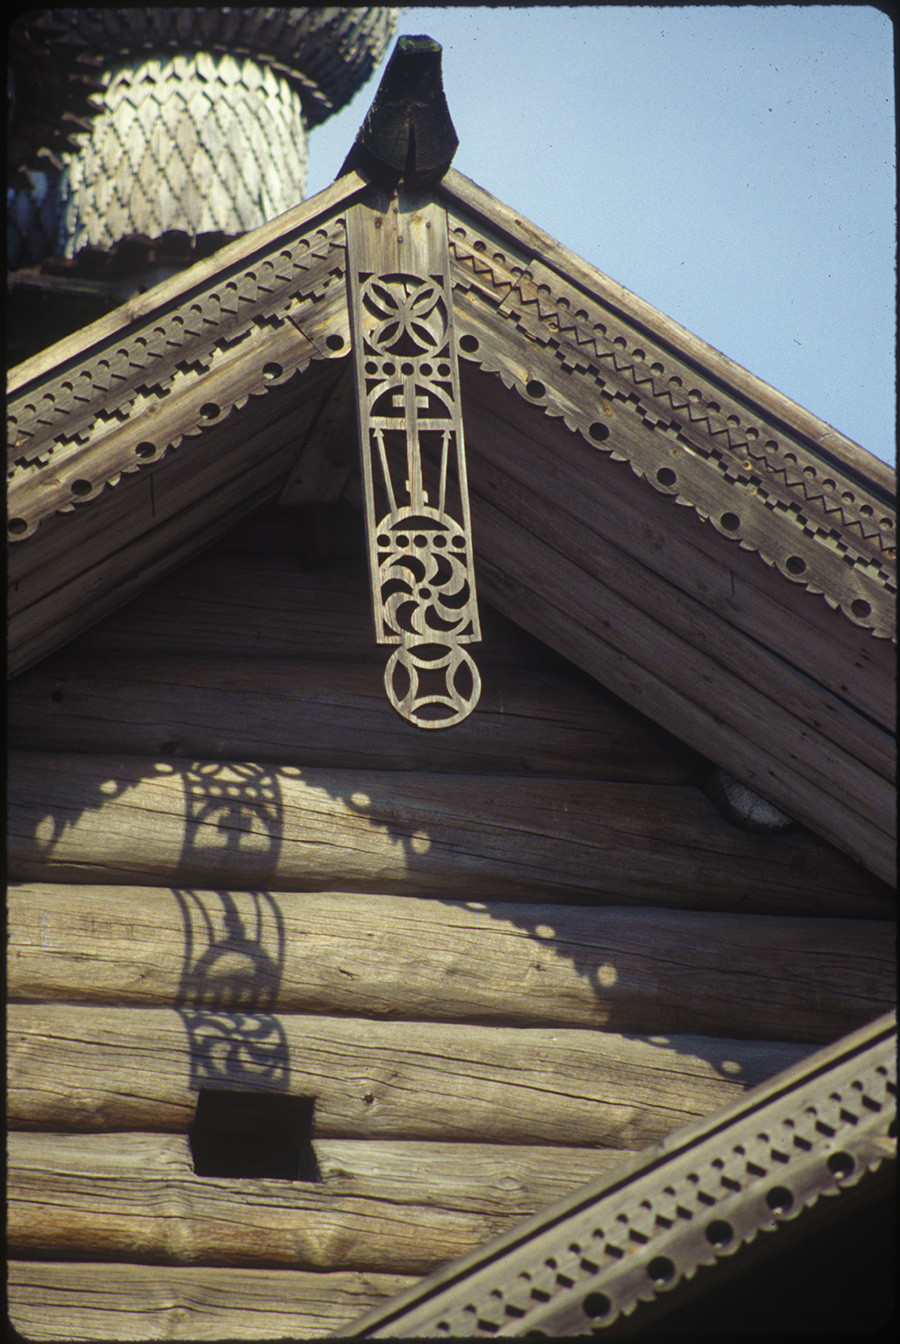 Iglesia de la Intercesión. Fachada oeste con talla decorativa (signo solar, cruz e instrumentos de la Pasión de Cristo). 6 de agosto de 1991